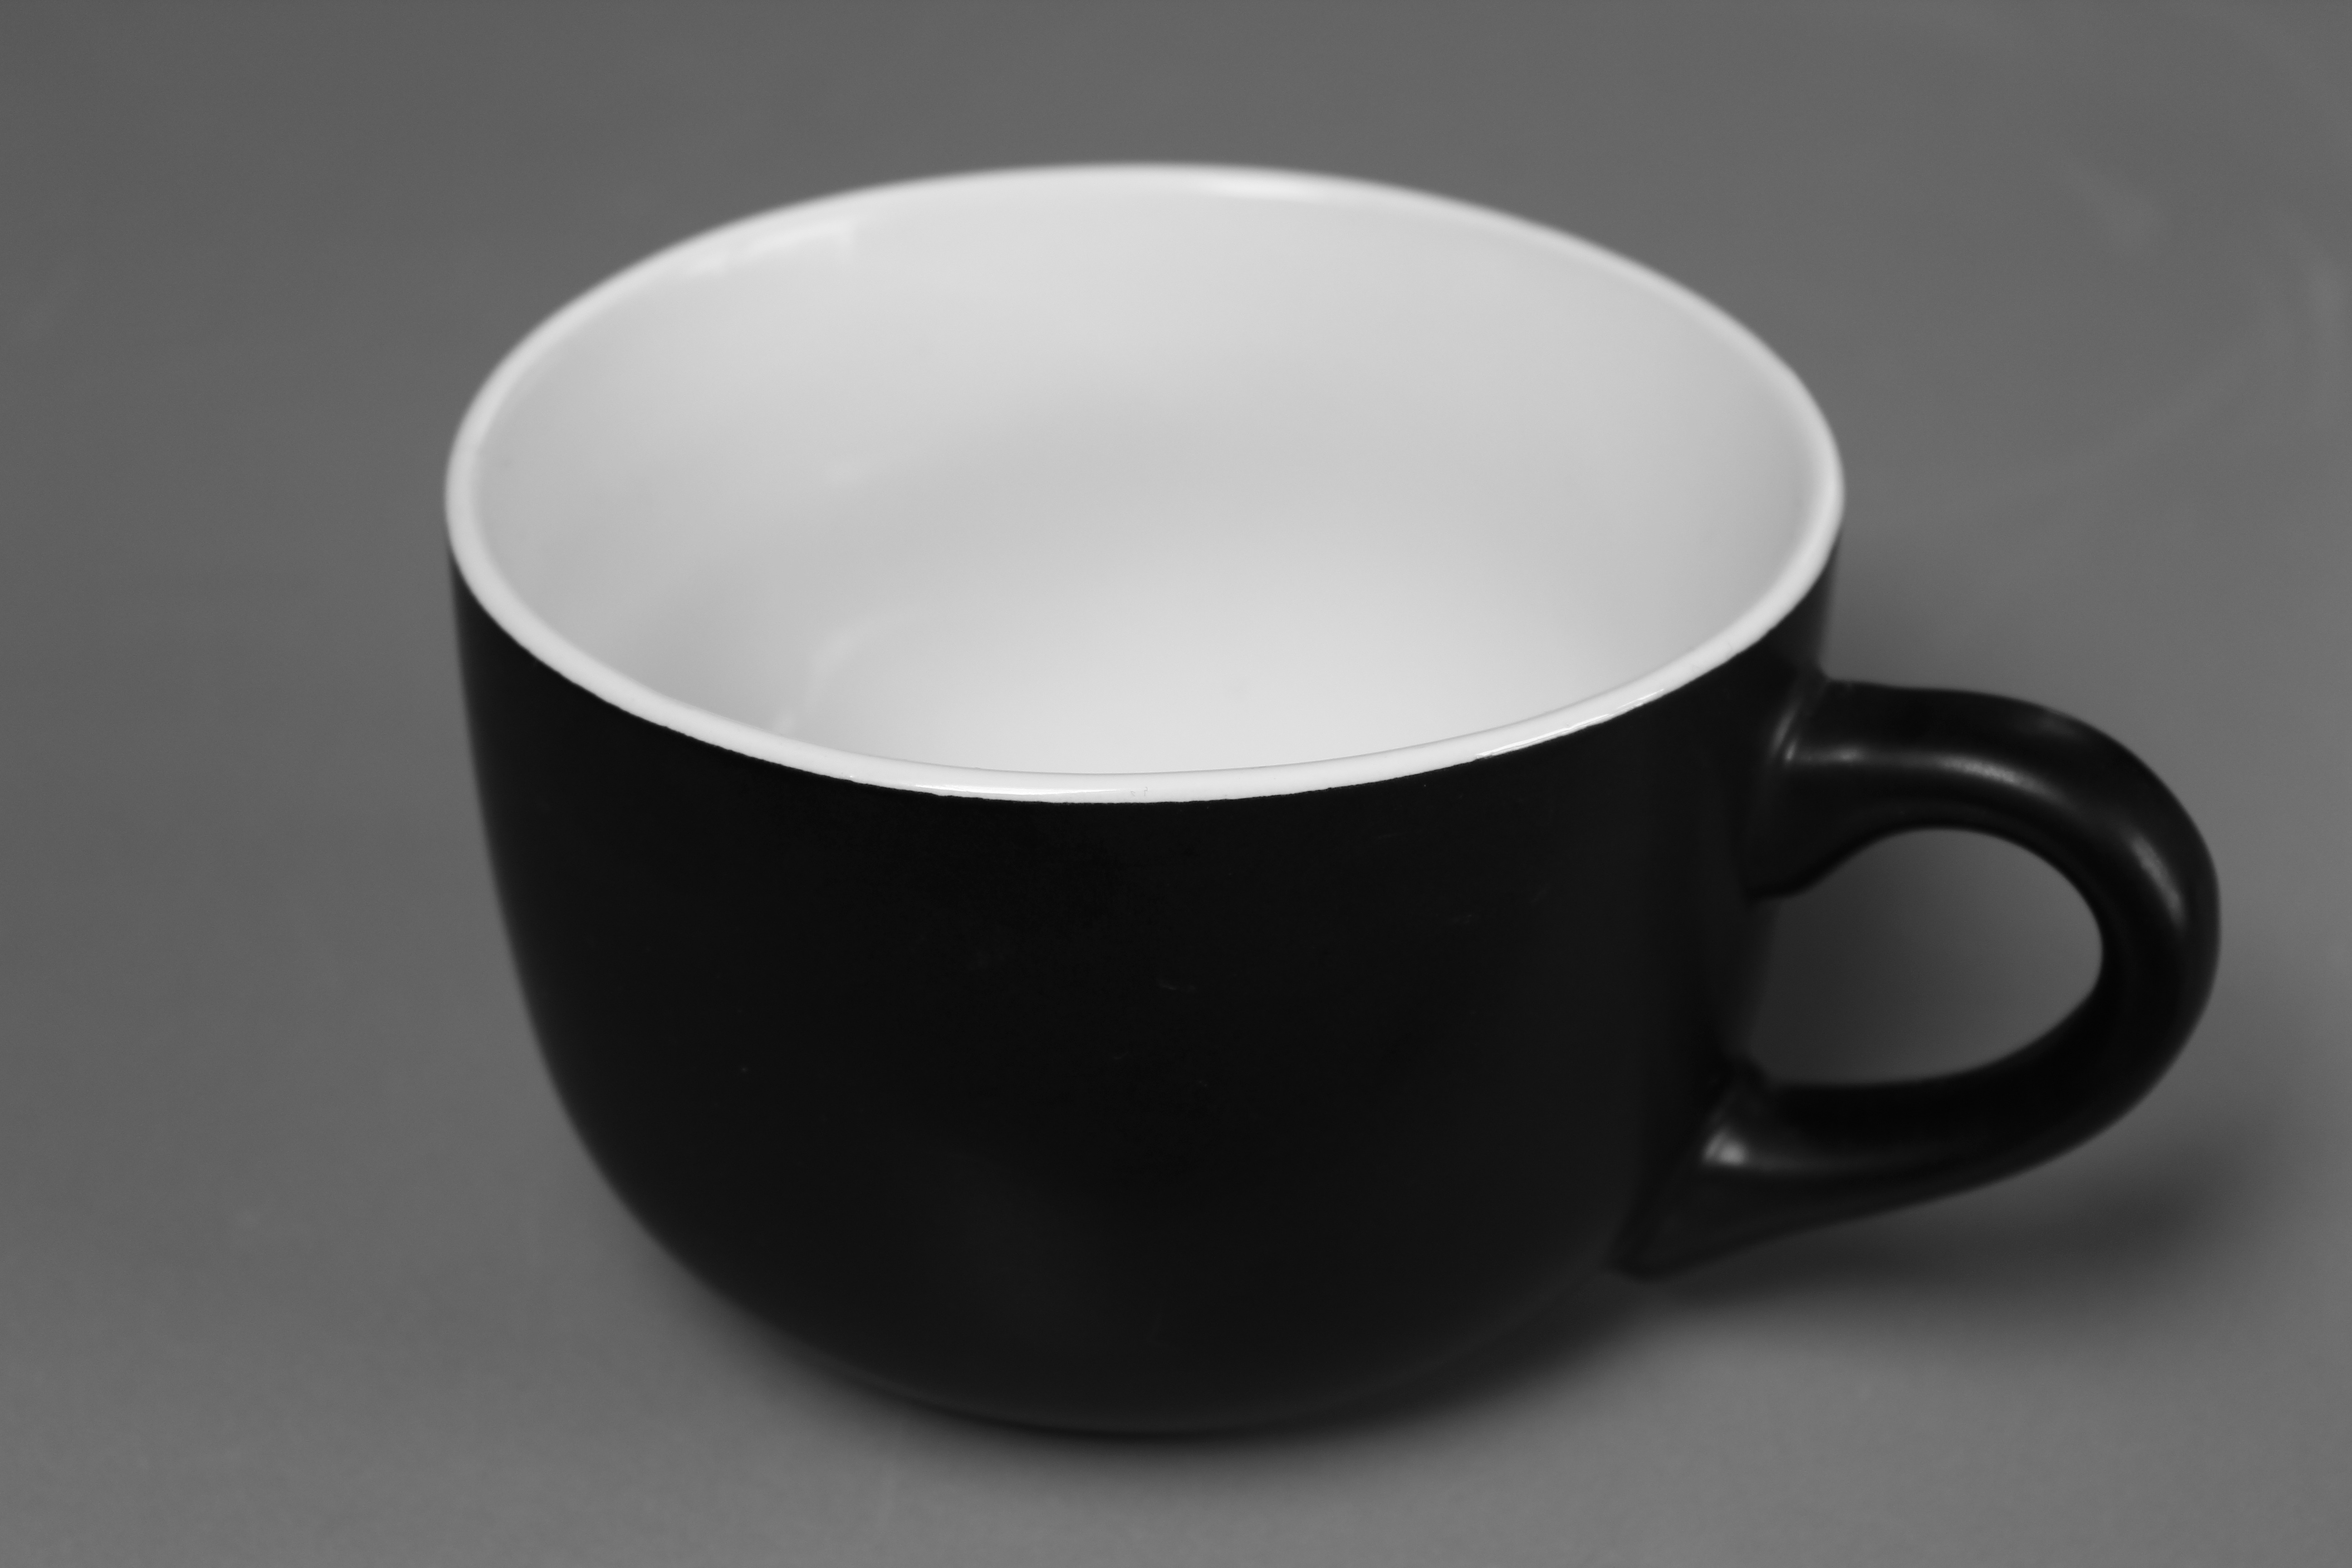 black and white ceramic coffee mug on gray textile